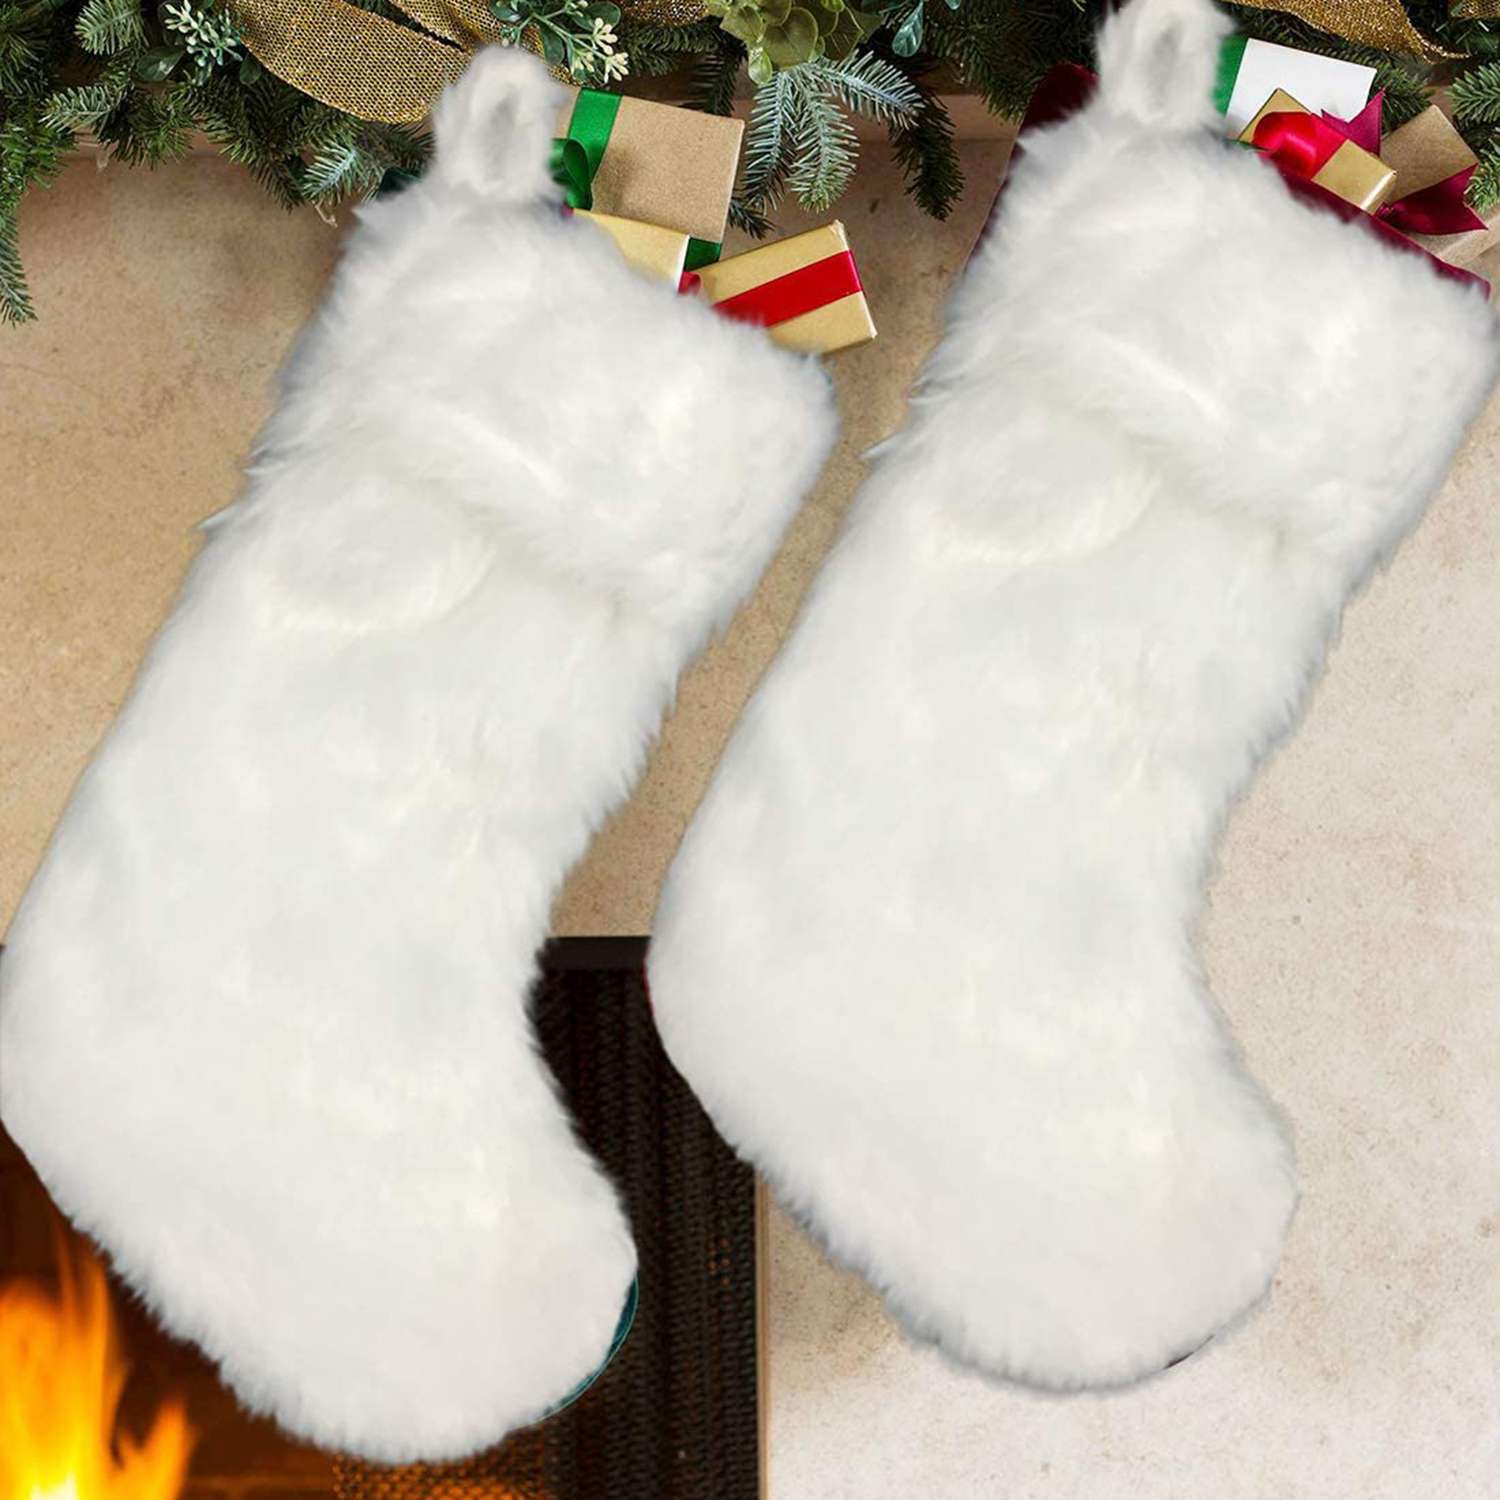 Best Christmas Stockings on Amazon